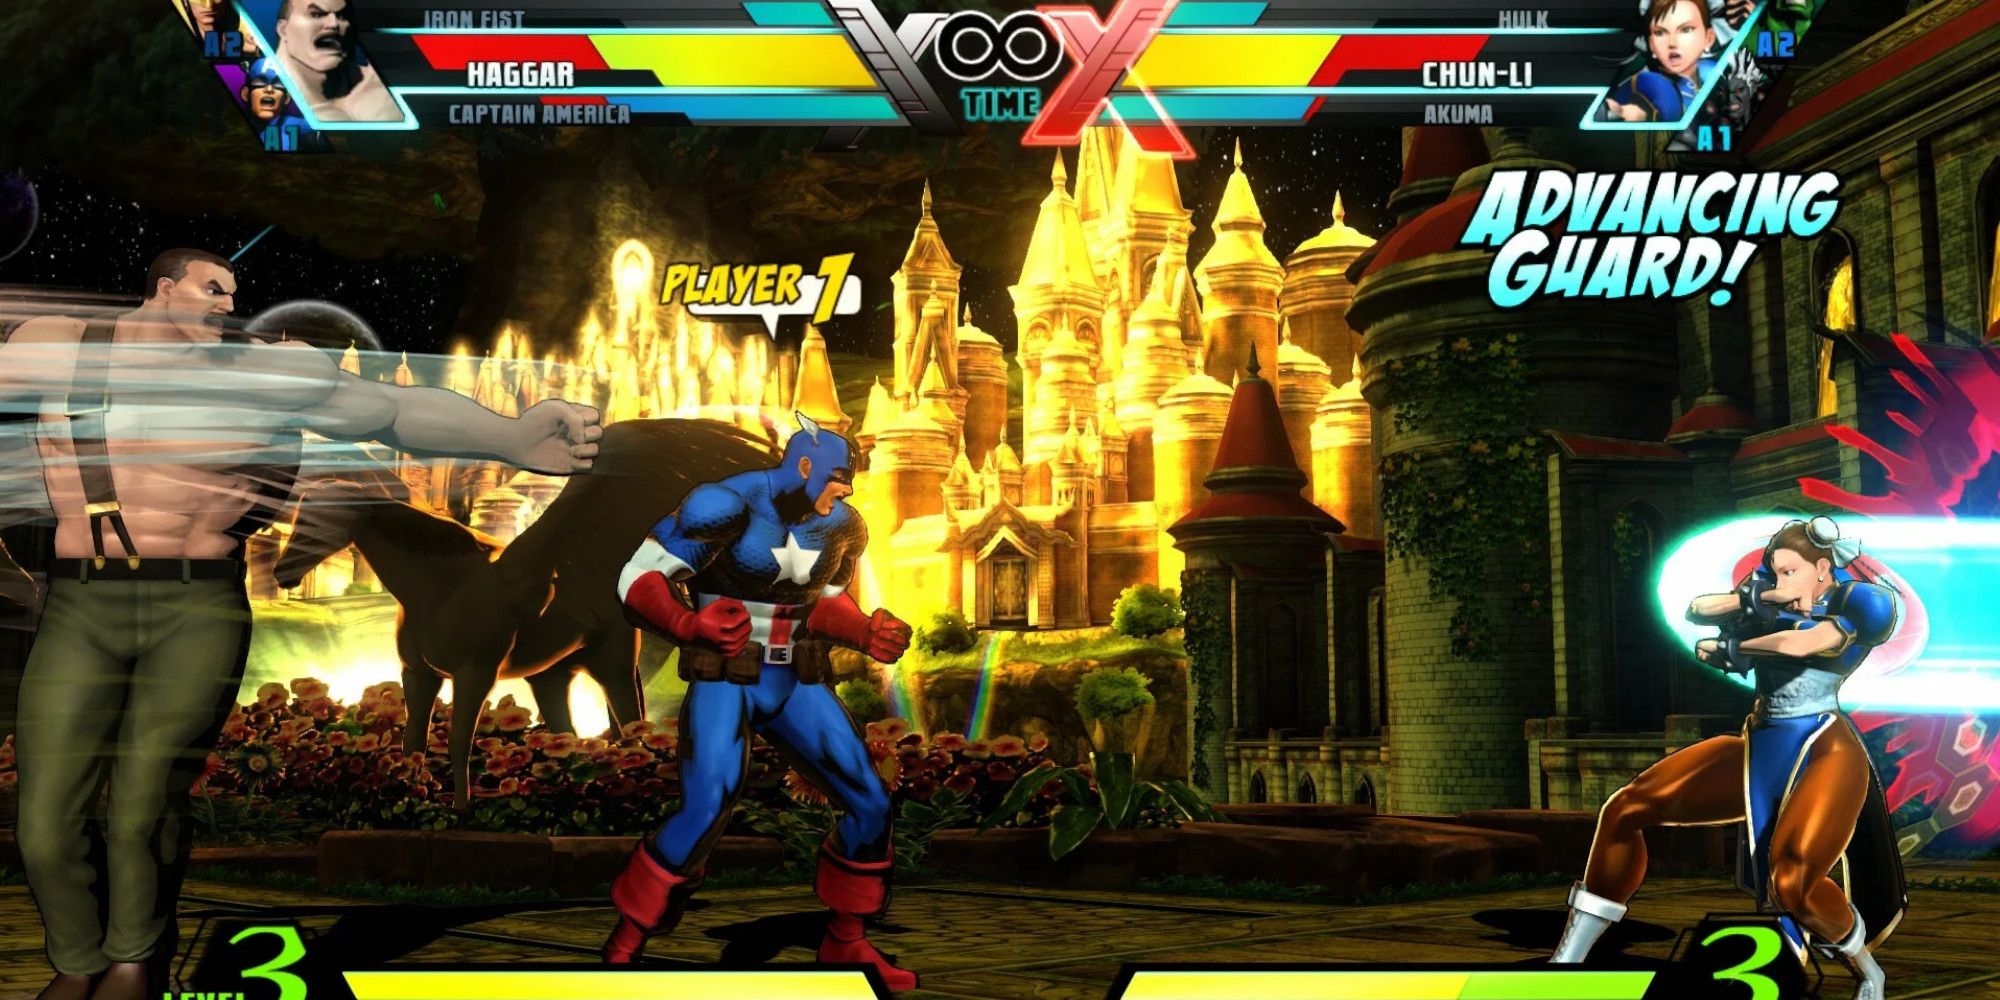 Mike Haggar, Captain America, and Chun-Li duking it out in Ultimate Marvel vs. Capcom 3